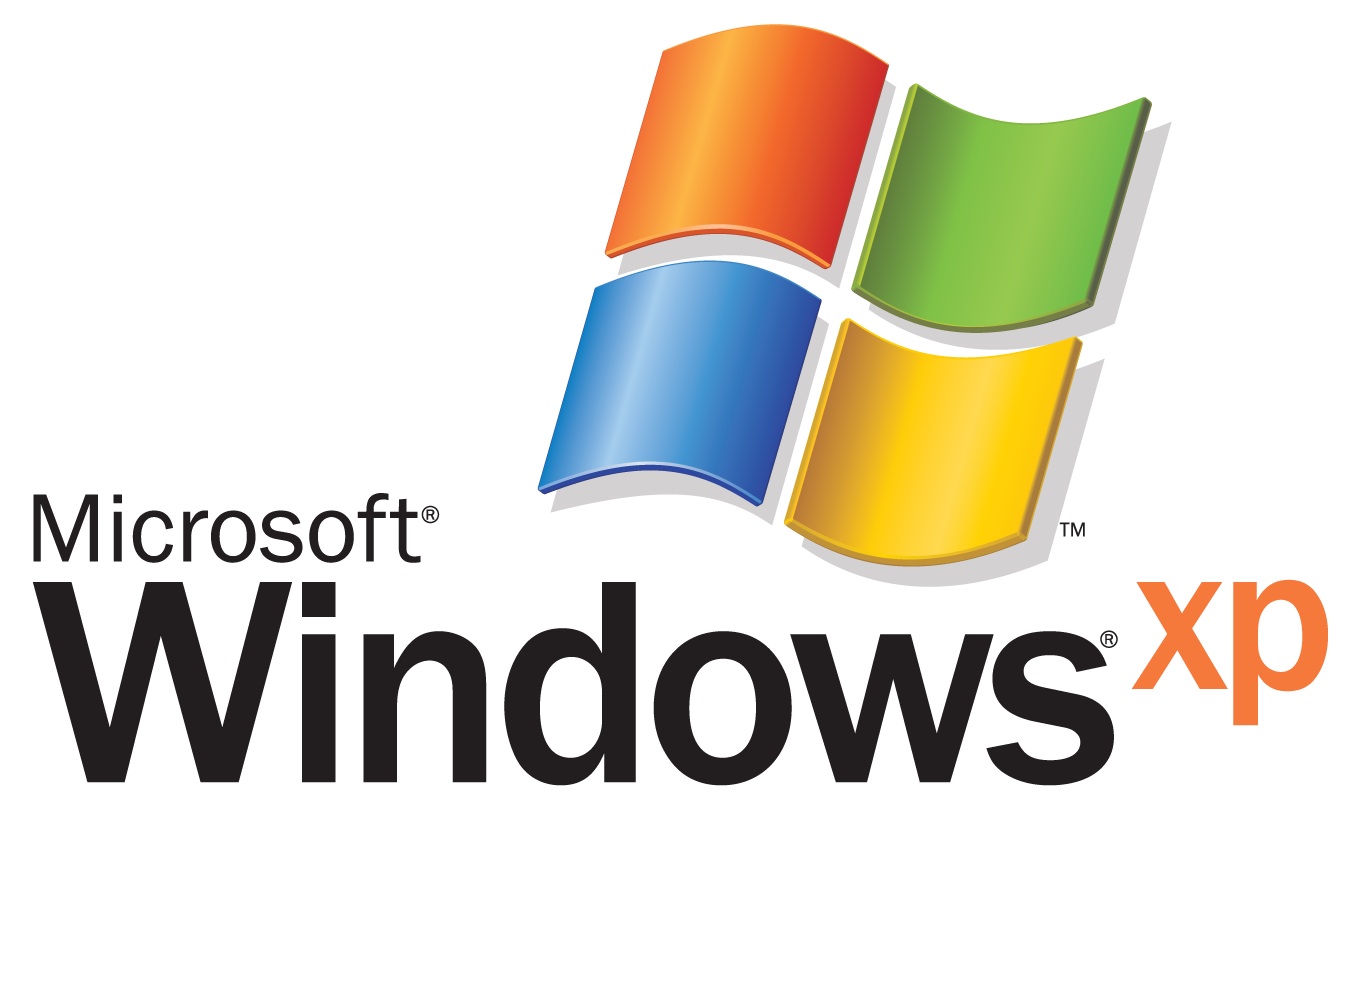 Windows XP 2001-2014